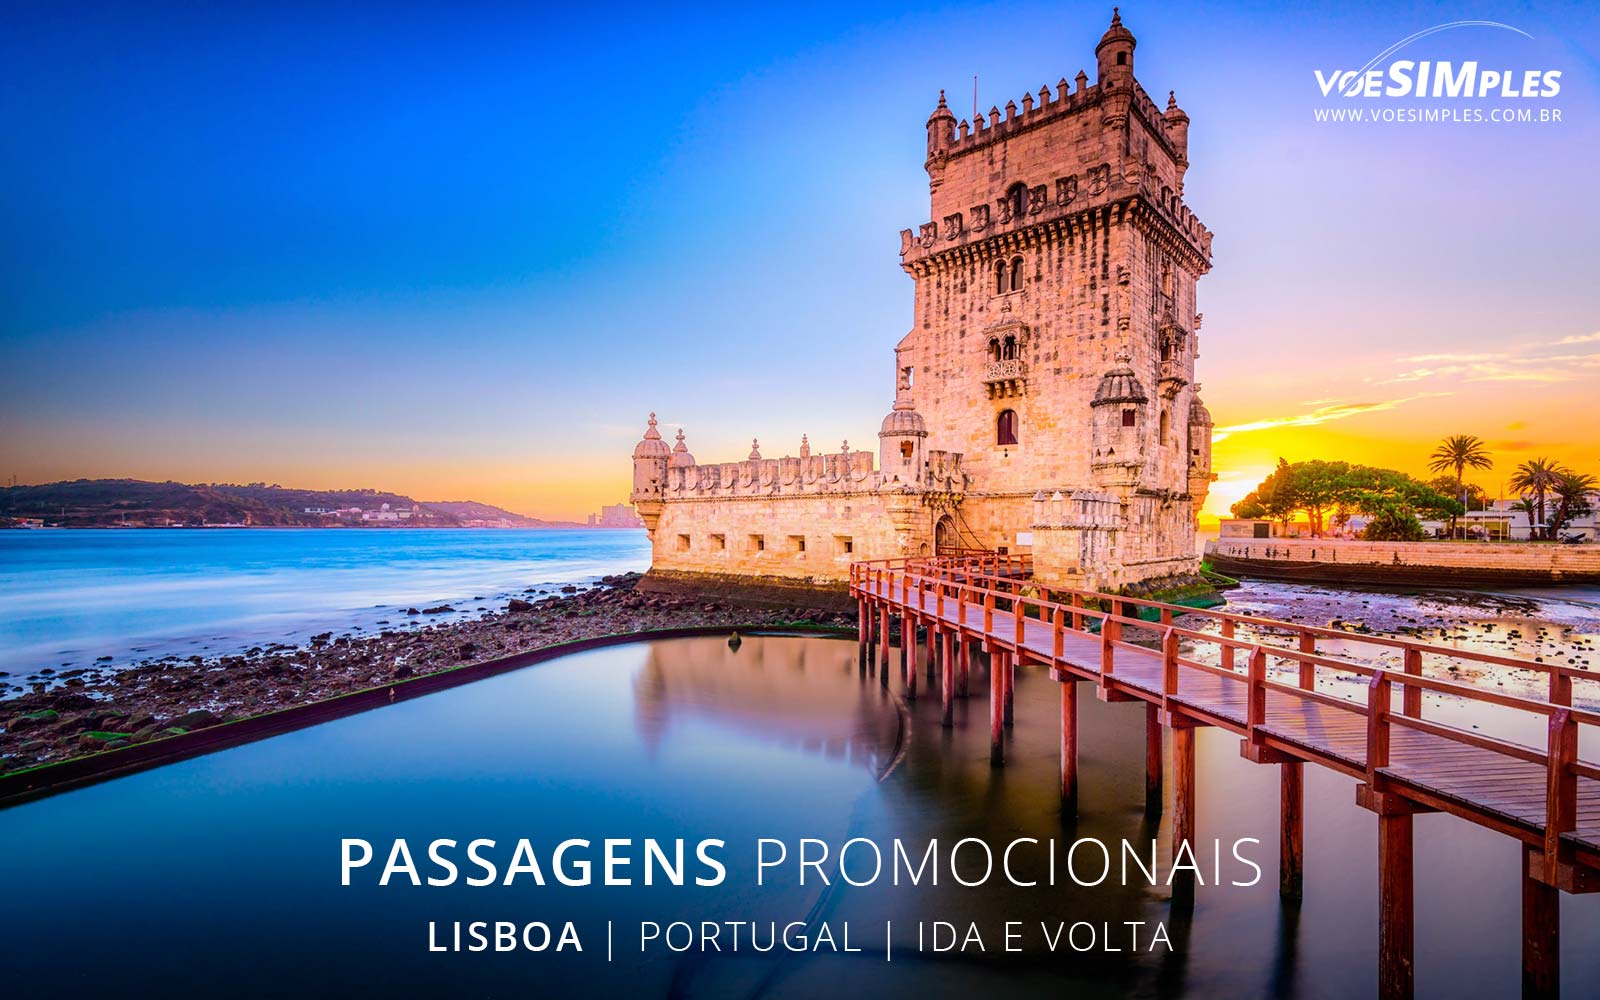 passagens-aereas-baratas-lisboa-portugal-europa-voe-simples-passages-aereas-promocionais-portugal-passagens-promo-lisboa